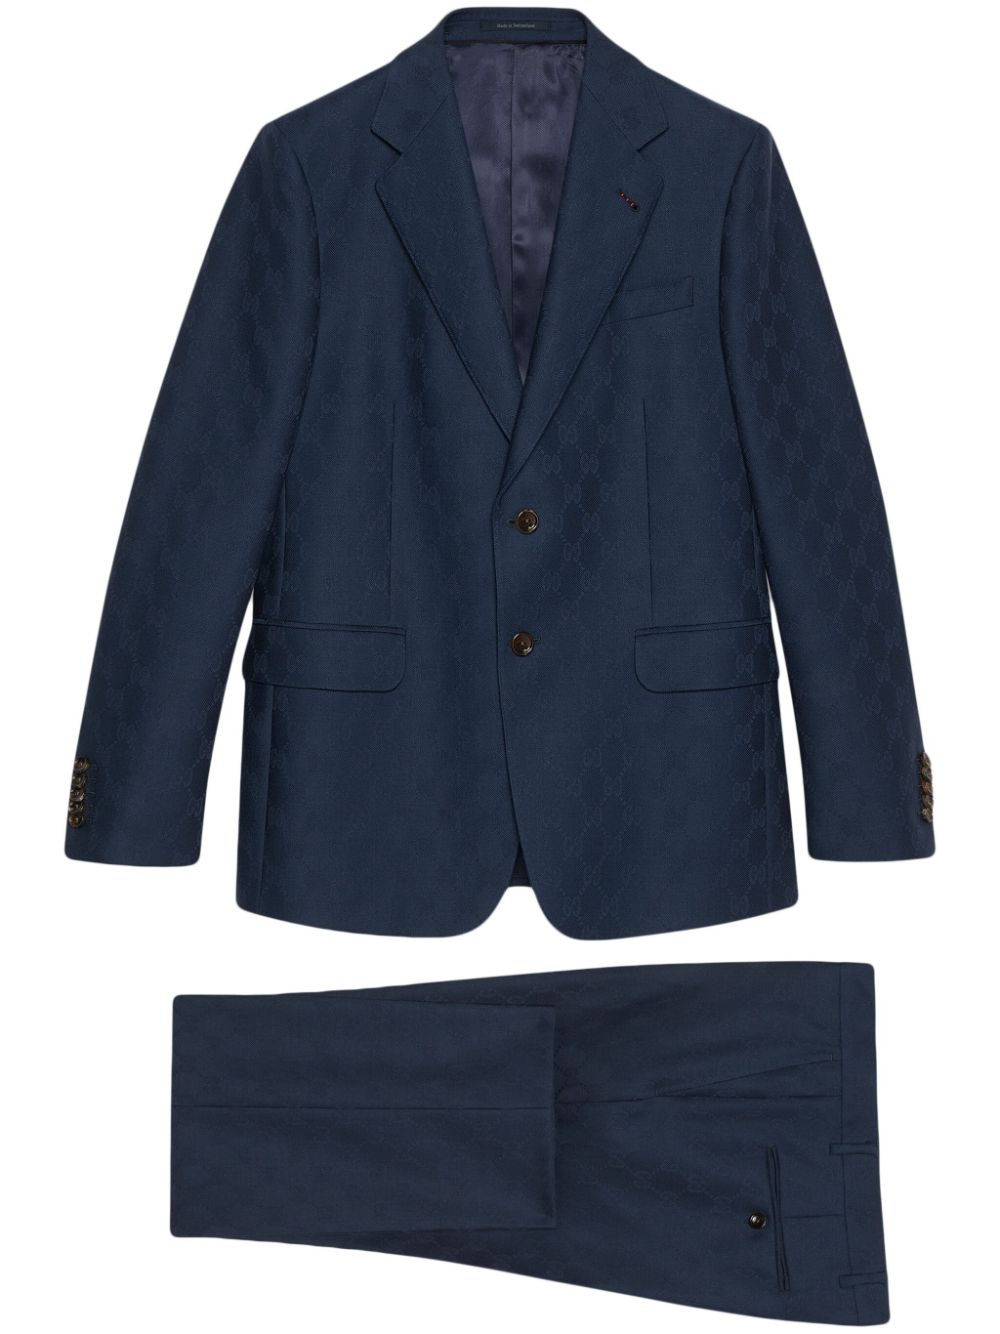 GUCCI Navy Blue GG Damier-Jacquard Wool Suit for Men